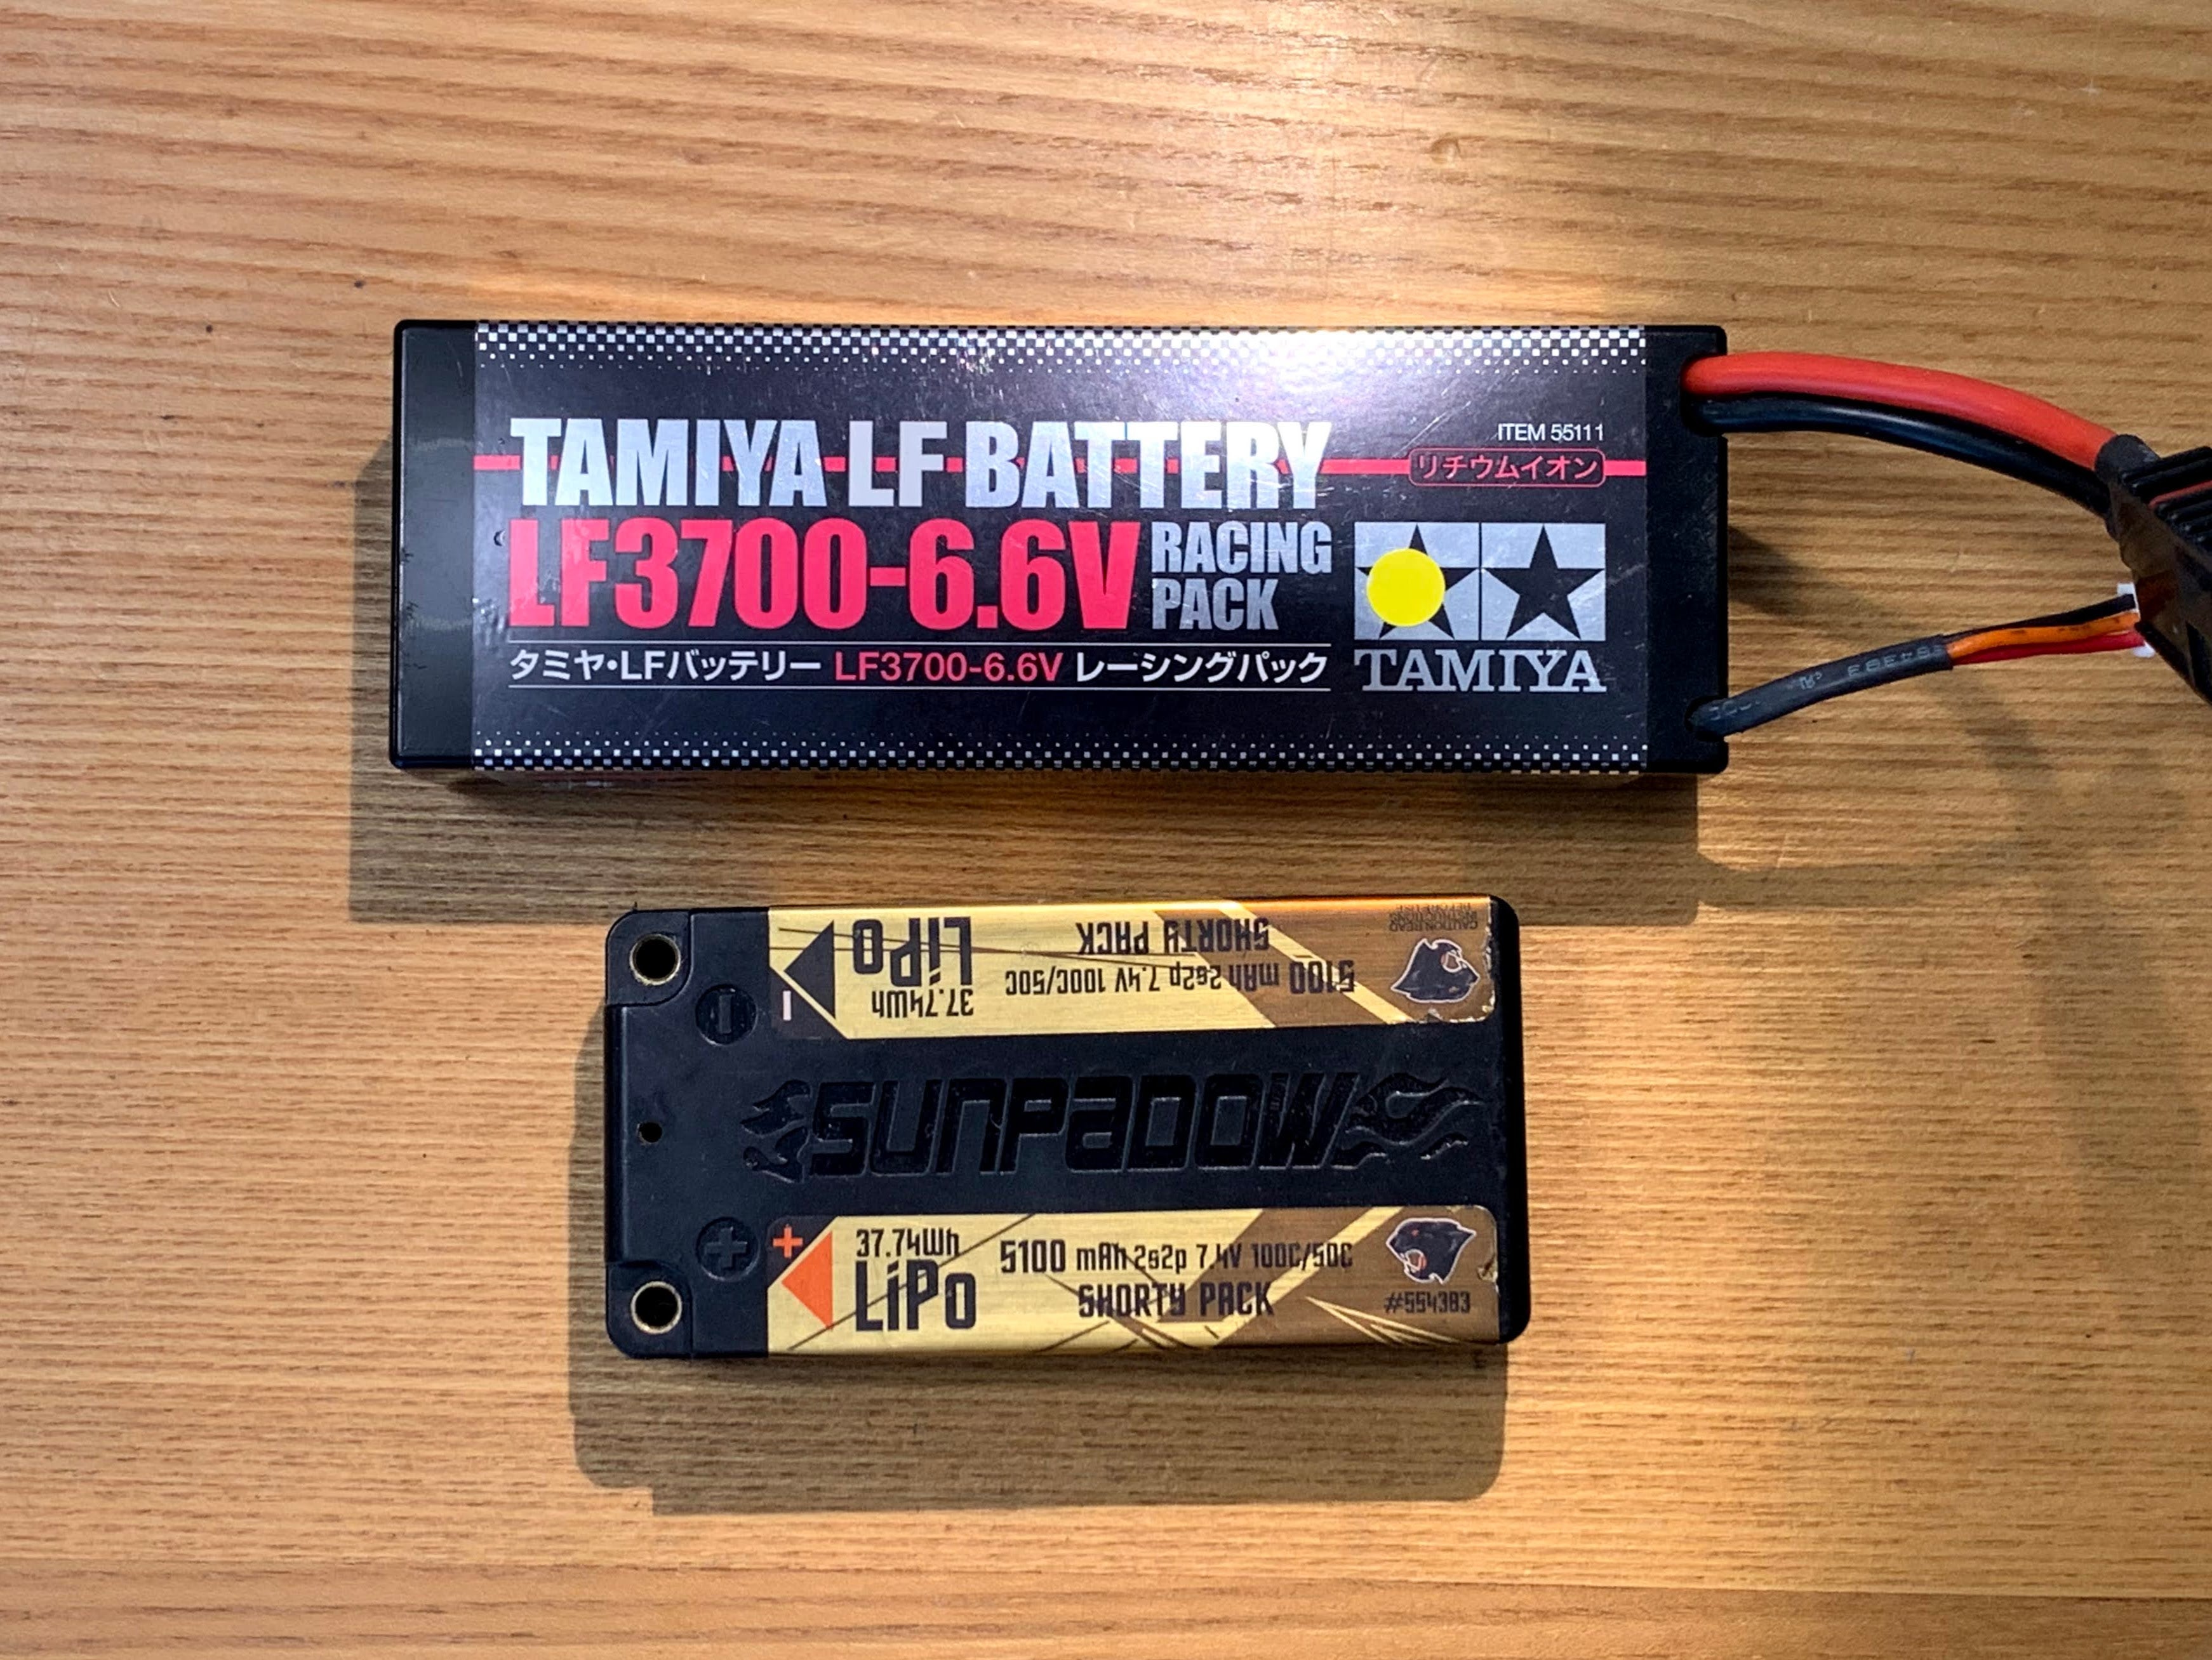 LiPo(リポ) と LiFe(リフェ) 〜ラジコン用バッテリーの違い